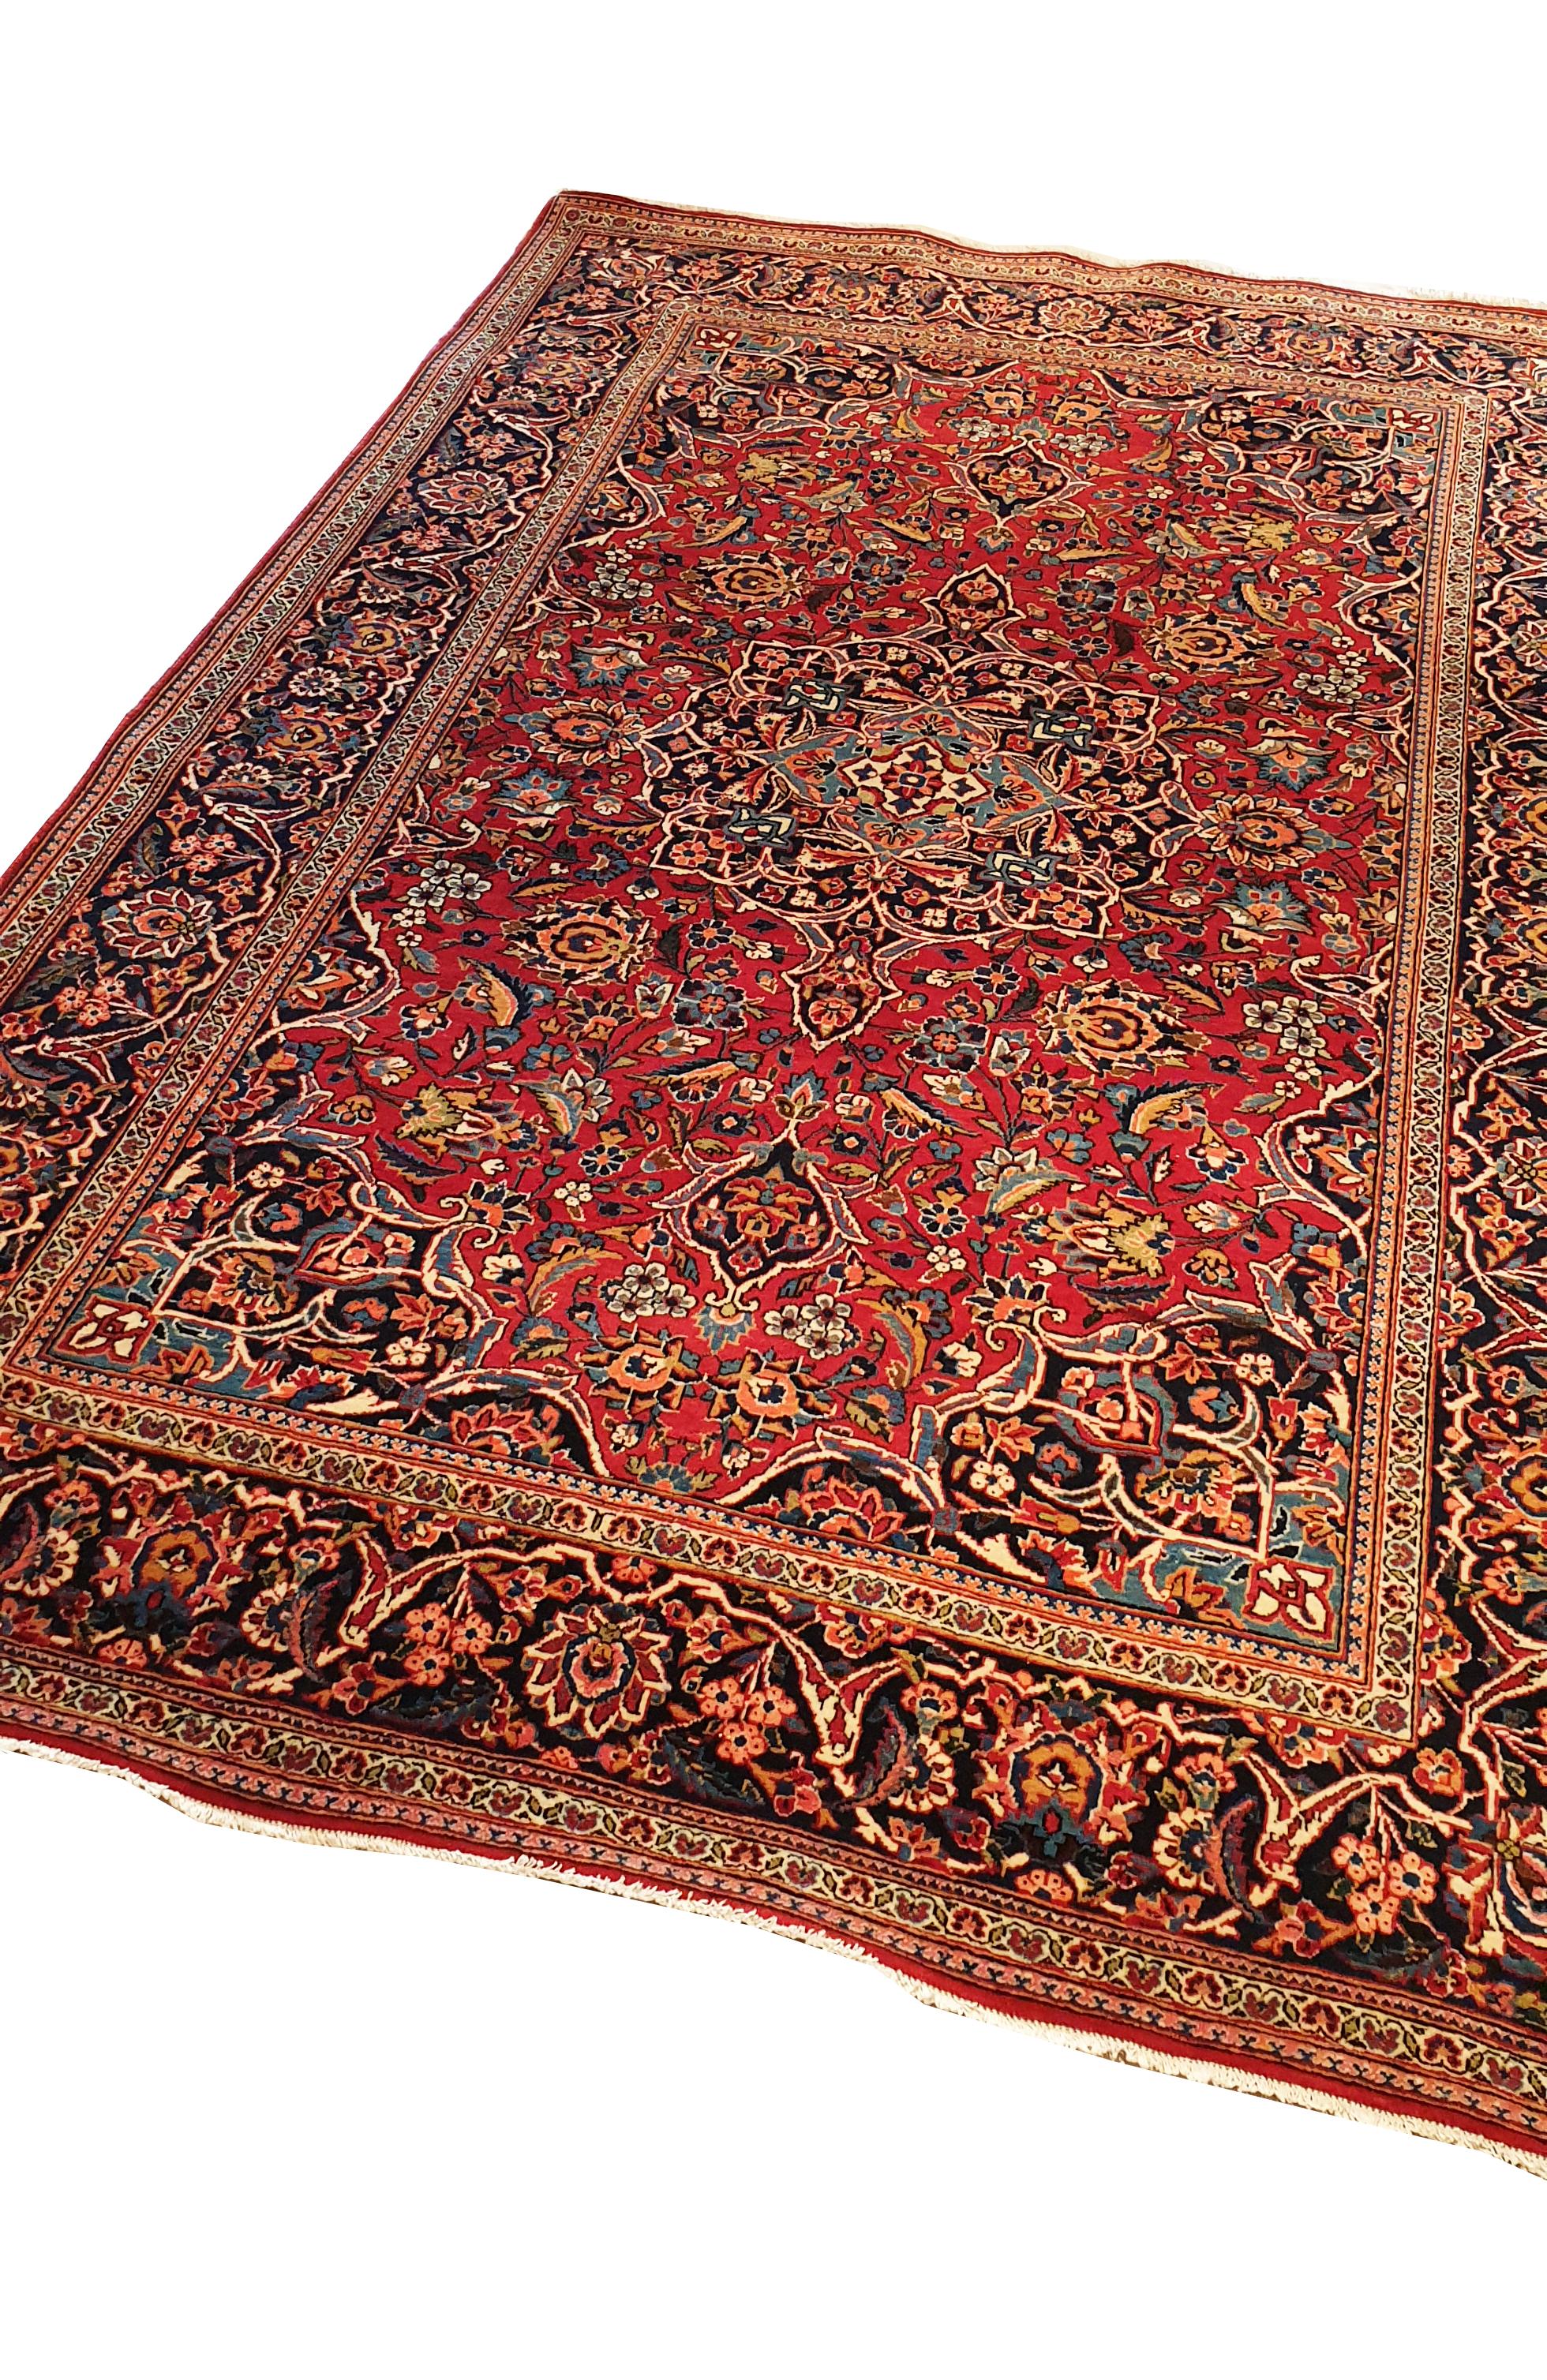 Rustic Oriental Carpet, 20th Century - N° 731 For Sale